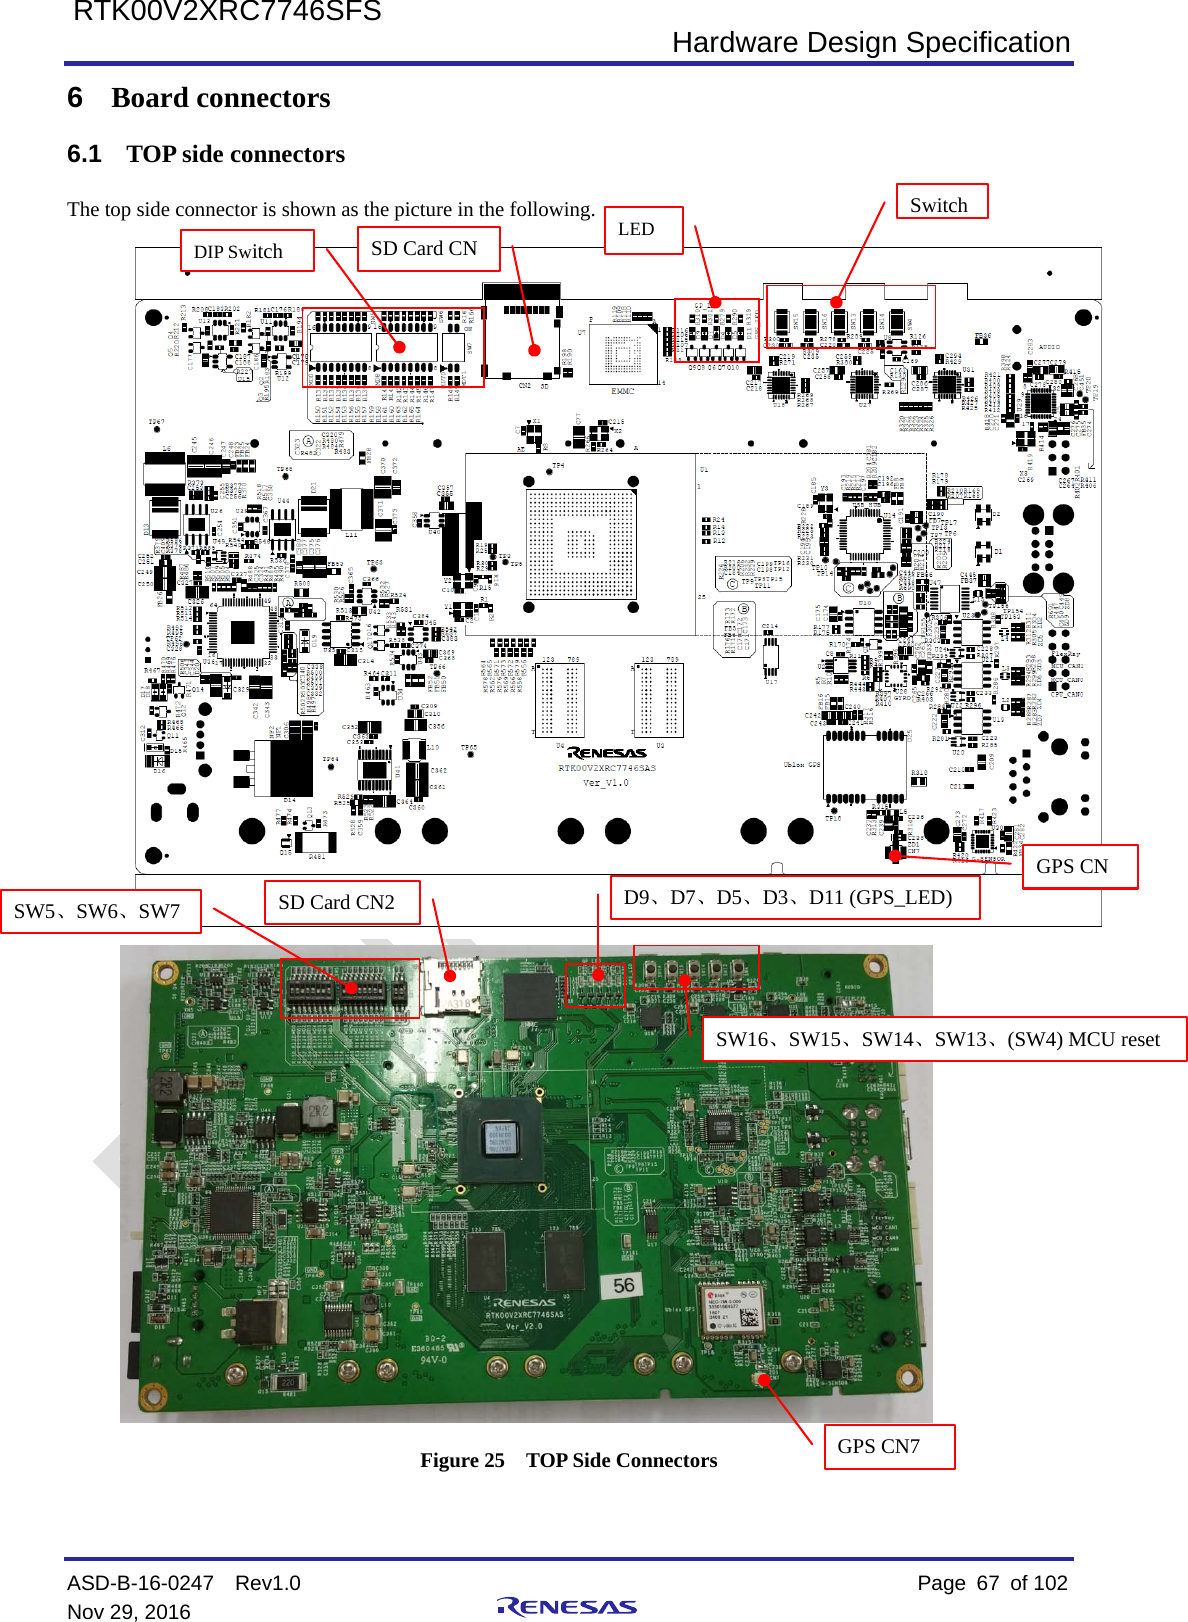  Hardware Design Specification ASD-B-16-0247  Rev1.0    Page  67 of 102 Nov 29, 2016     RTK00V2XRC7746SFS 6  Board connectors 6.1 TOP side connectors The top side connector is shown as the picture in the following.   Figure 25  TOP Side Connectors SD Card CN2 GPS CN7 SD Card CN GPS CN DIP Switch   Switch  LED SW5、SW6、SW7 D9、D7、D5、D3、D11 (GPS_LED) SW16、SW15、SW14、SW13、(SW4) MCU reset      